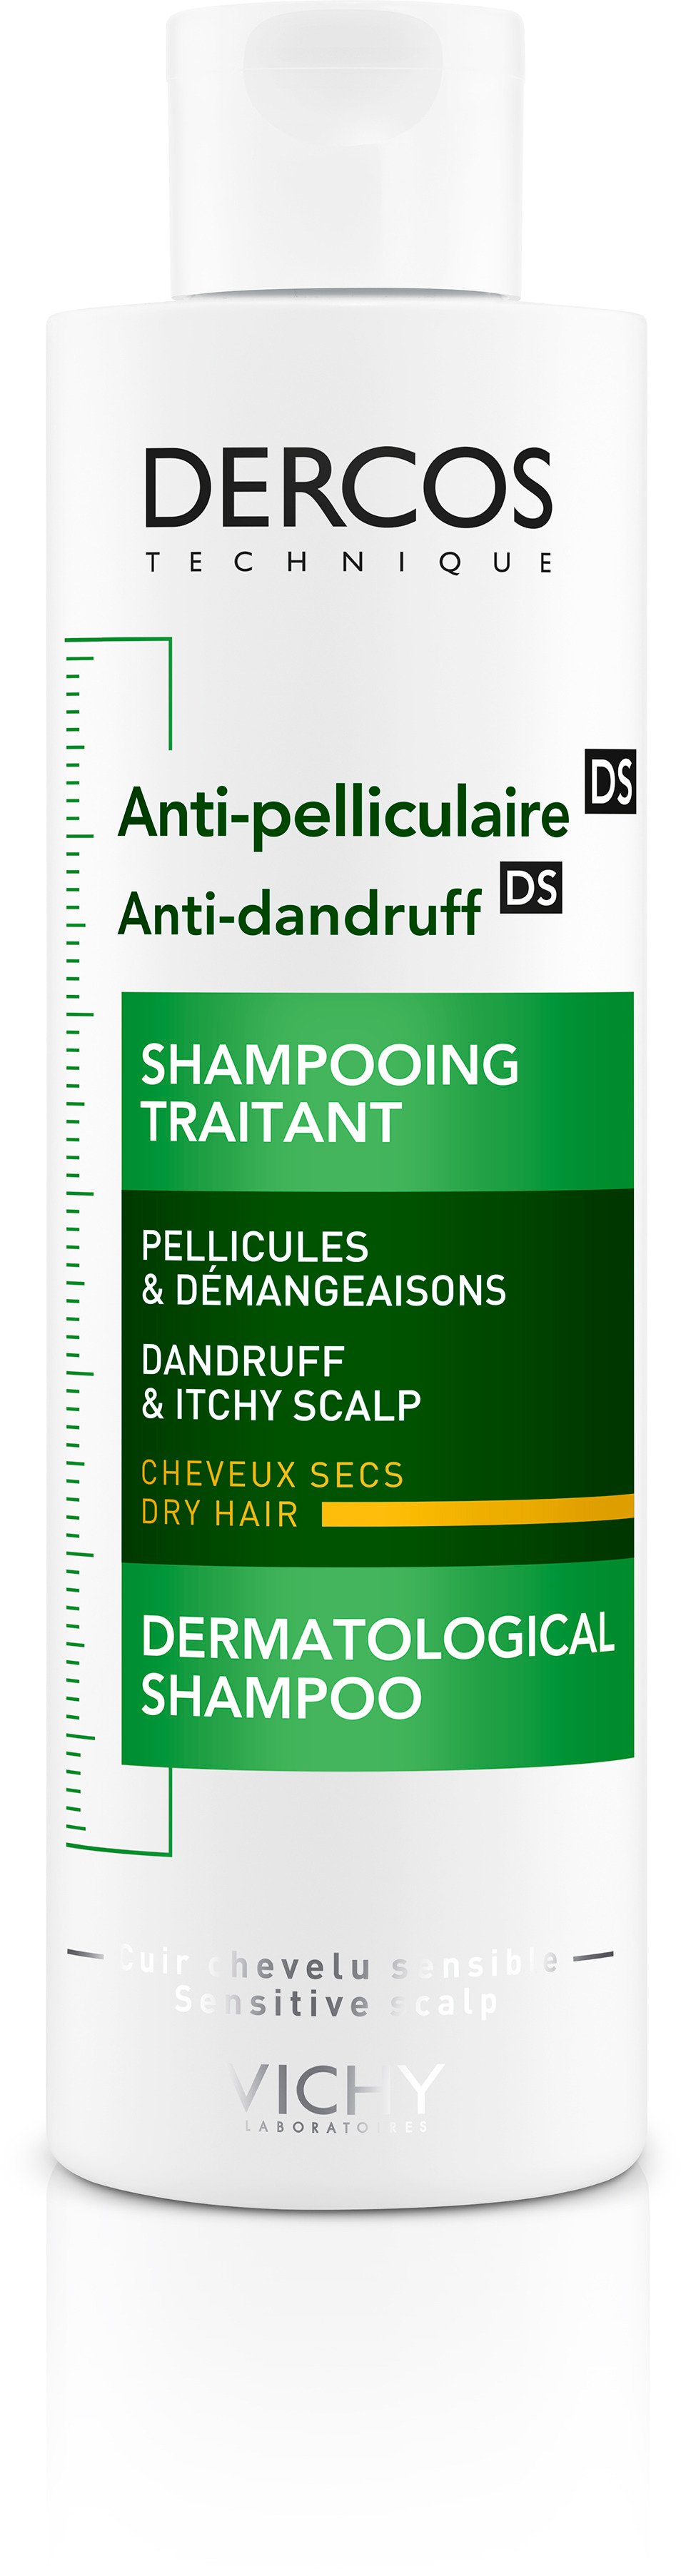 Vichy Dercos Anti-Dandruff Shampoo Dry Hair 200 ml